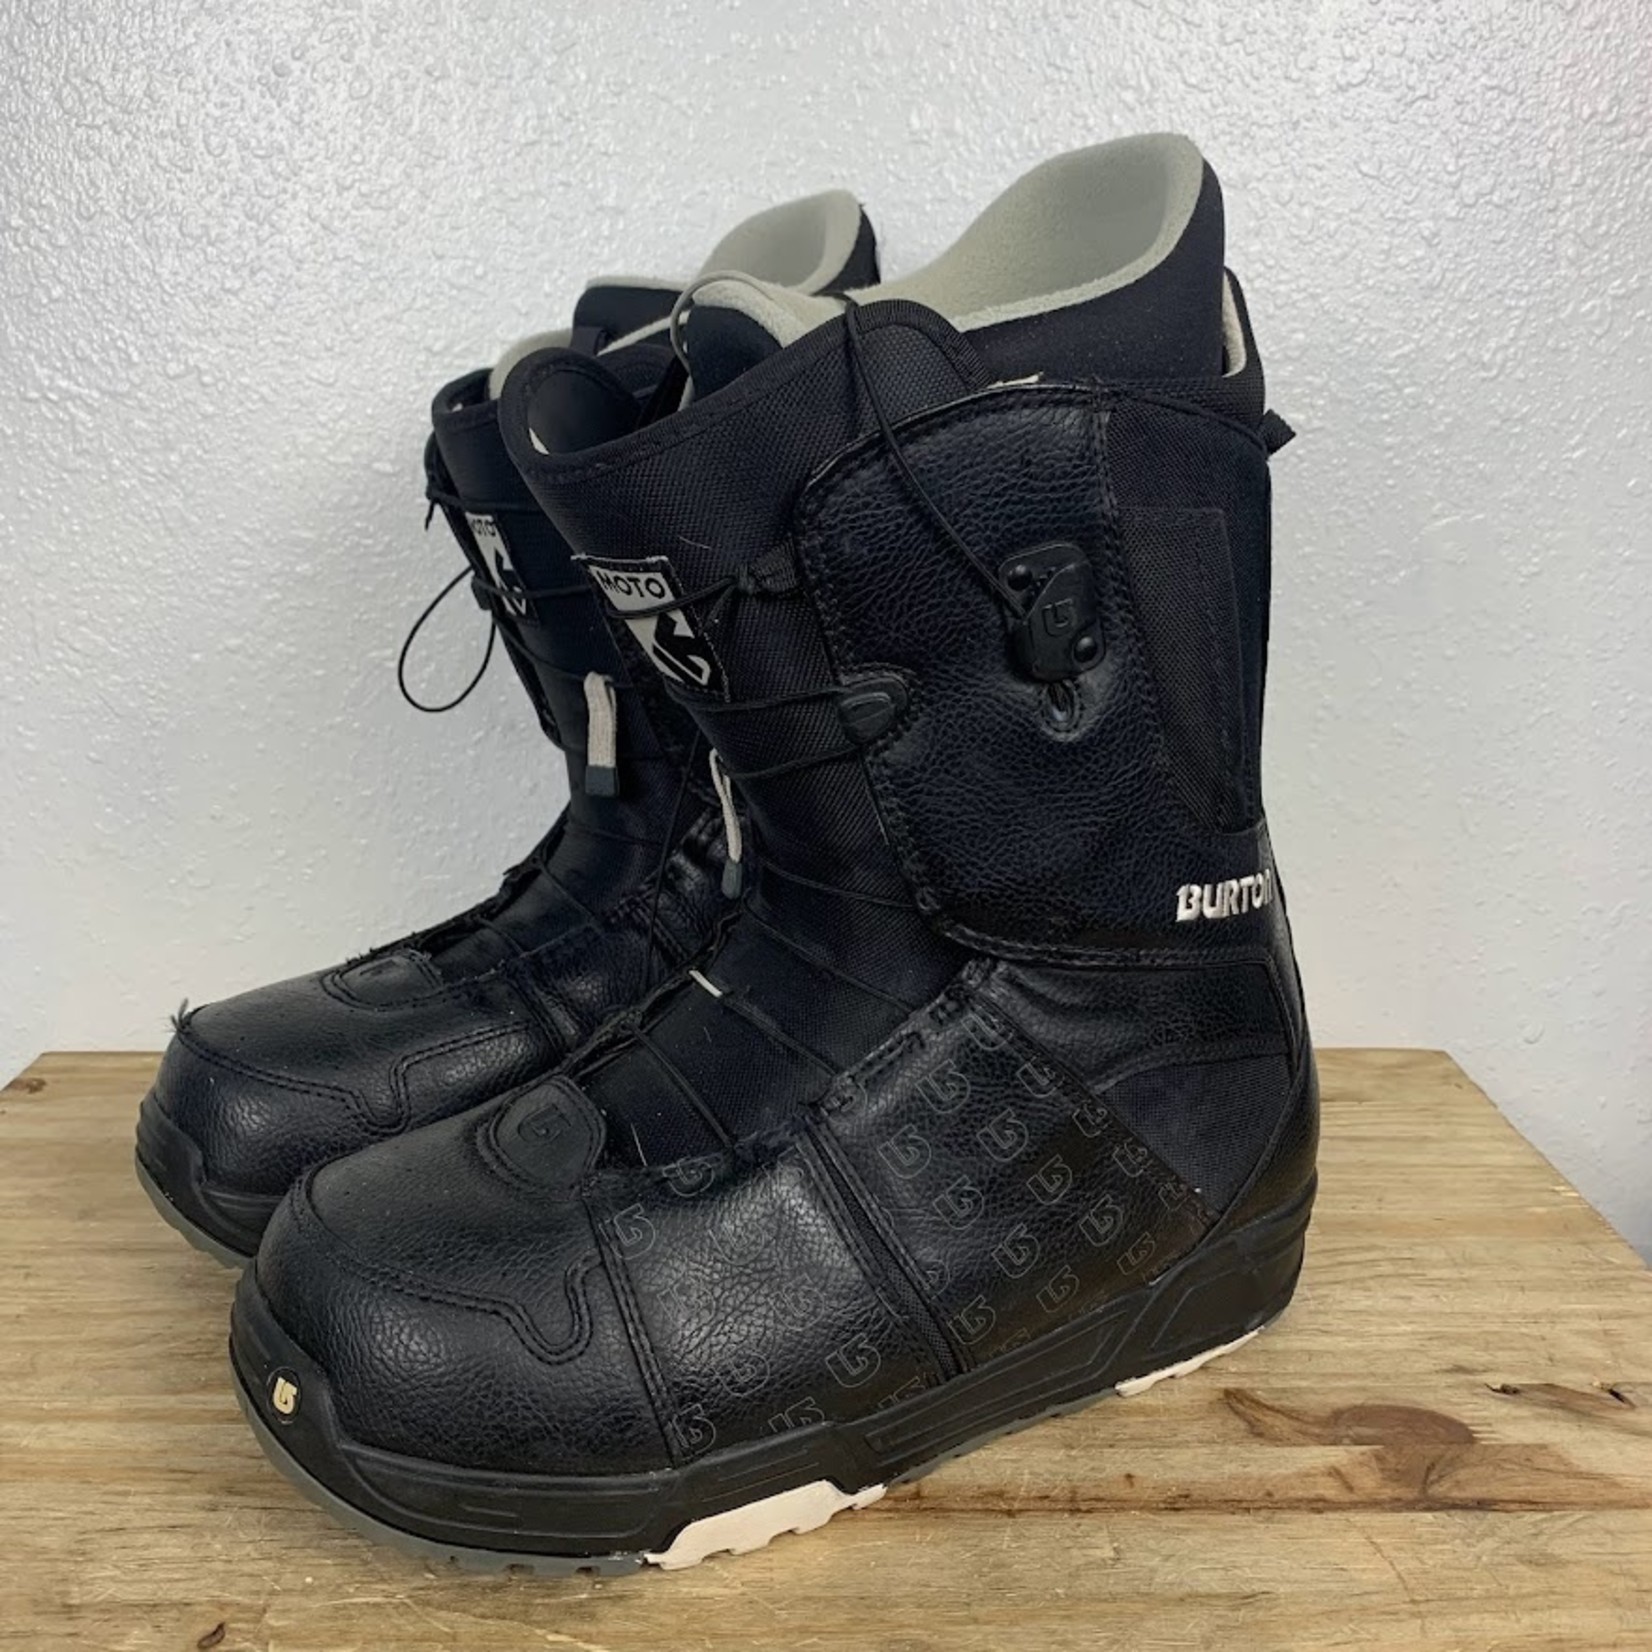 Burton Moto Snowboard Boots, Size 12 MENS